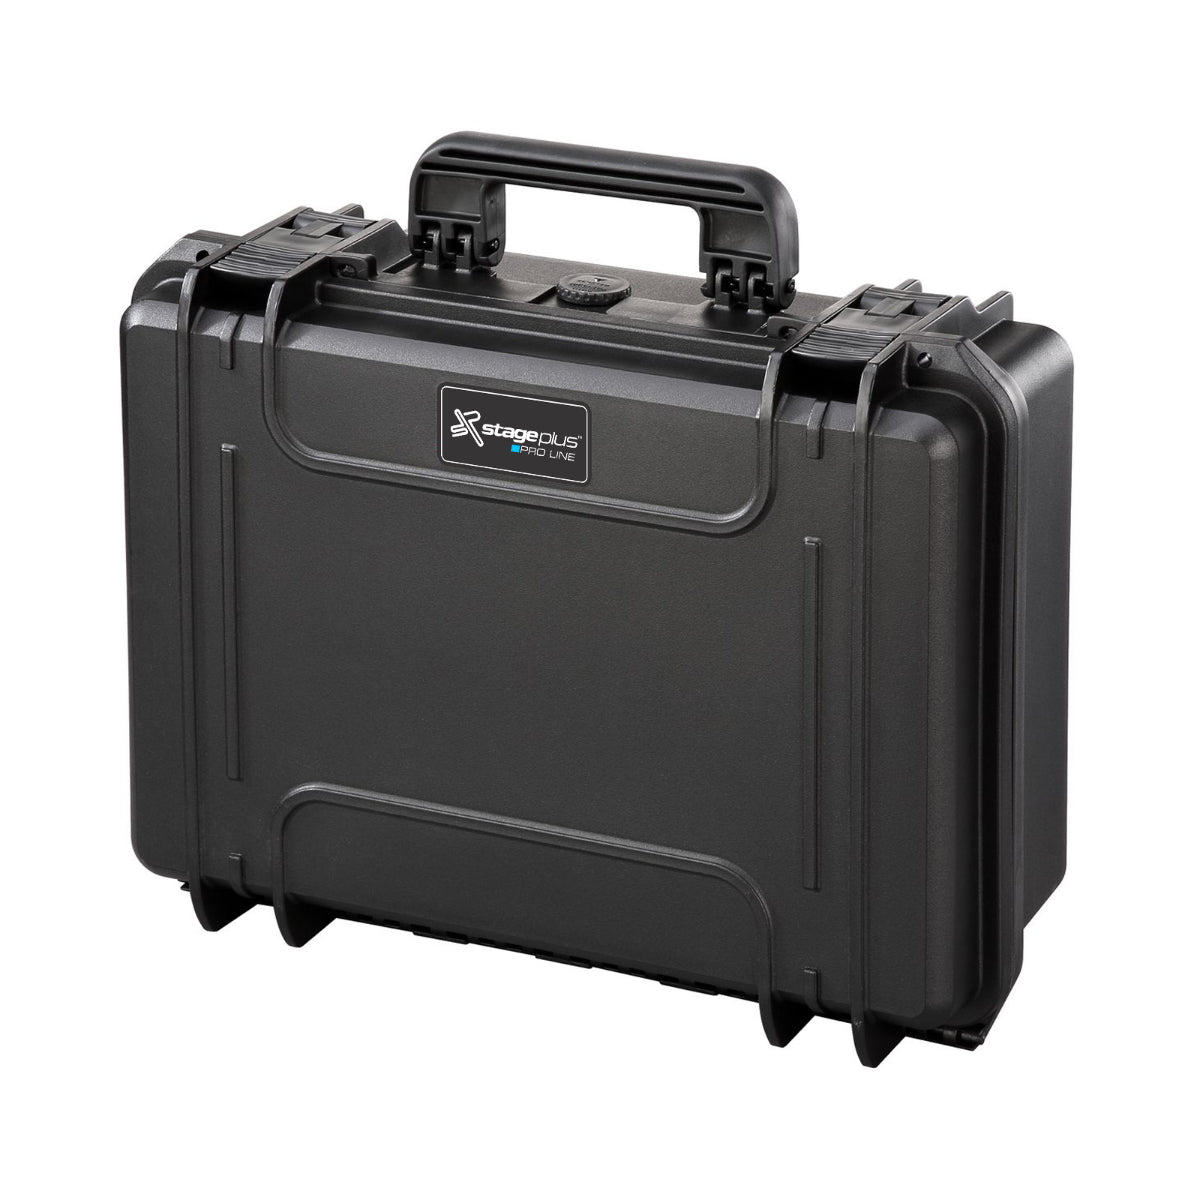 SP PRO 430S Black Carry Case, Cubed Foam, ID: L426xW290xH159mm